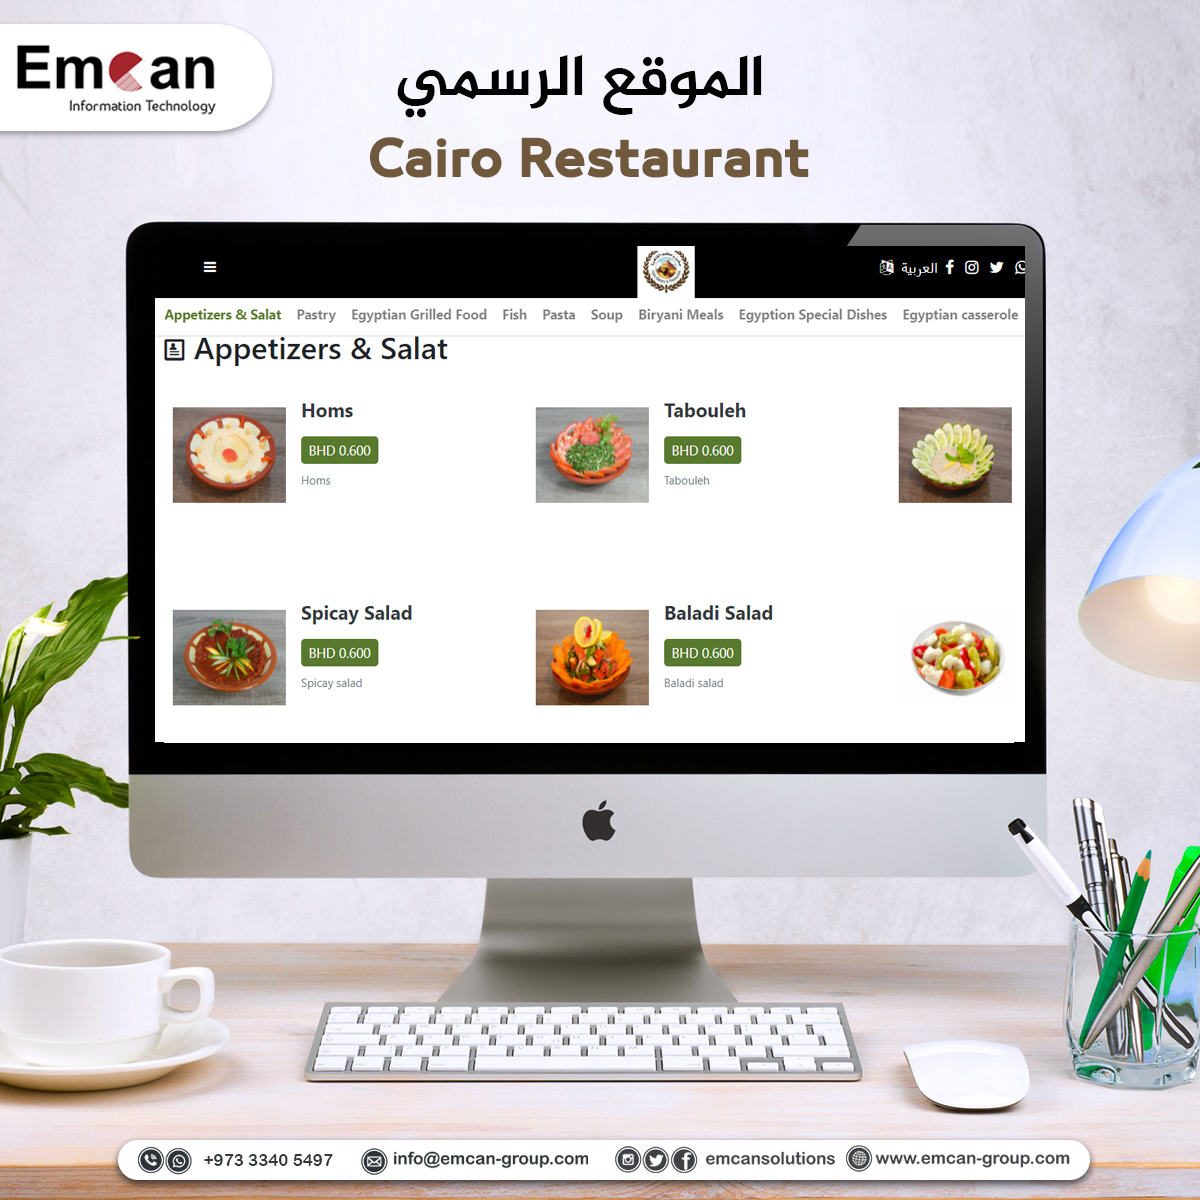 Cairo Restaurant website